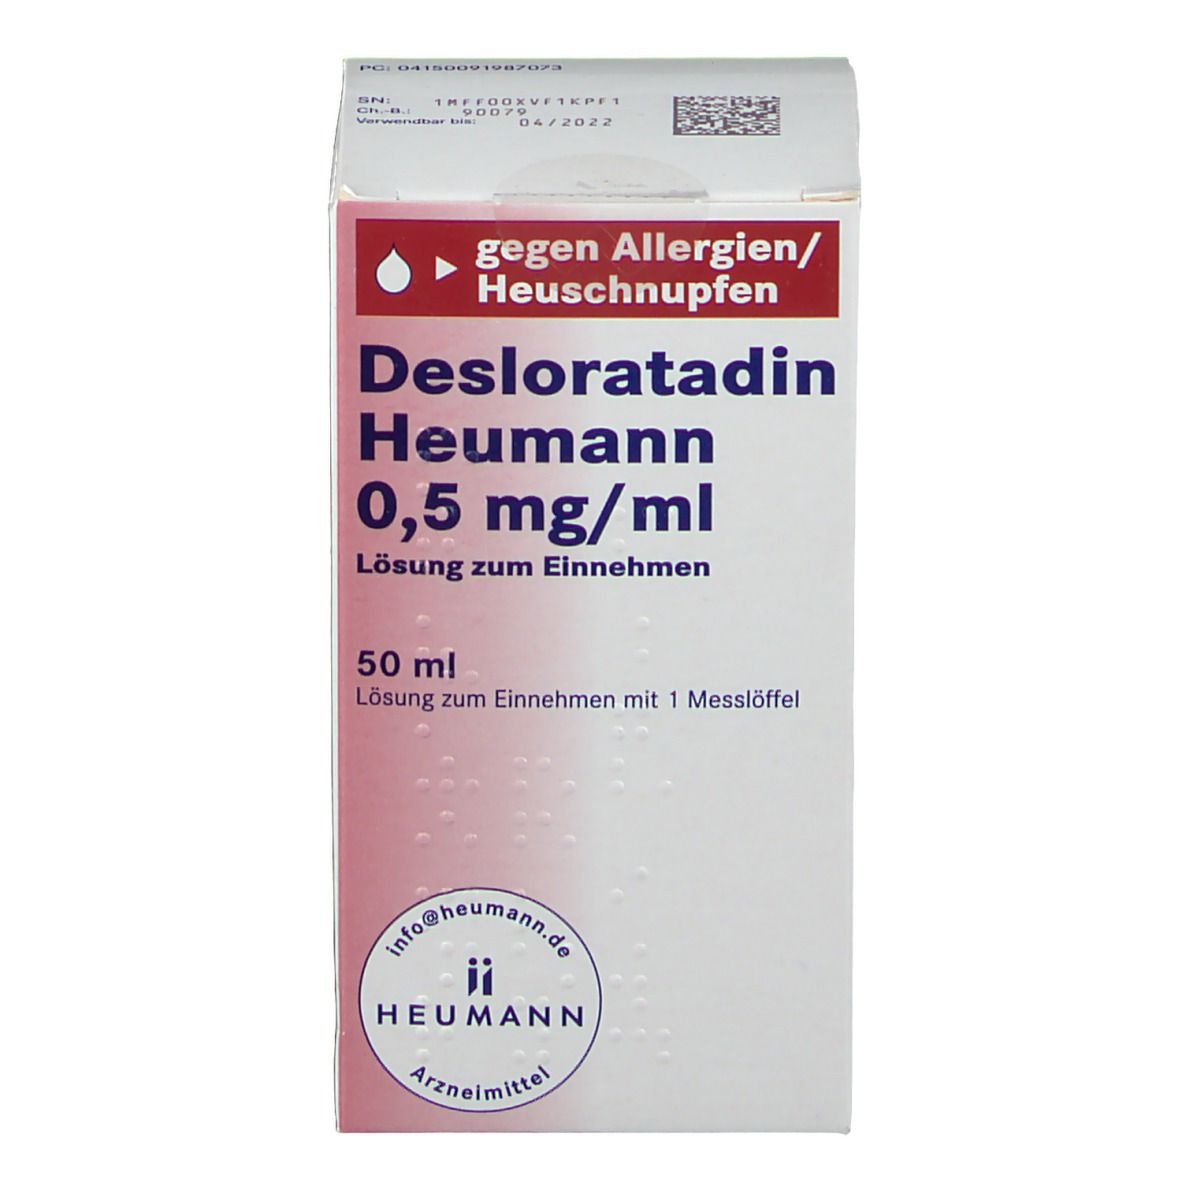 Desloratadin Heumann 0,5 mg/ml